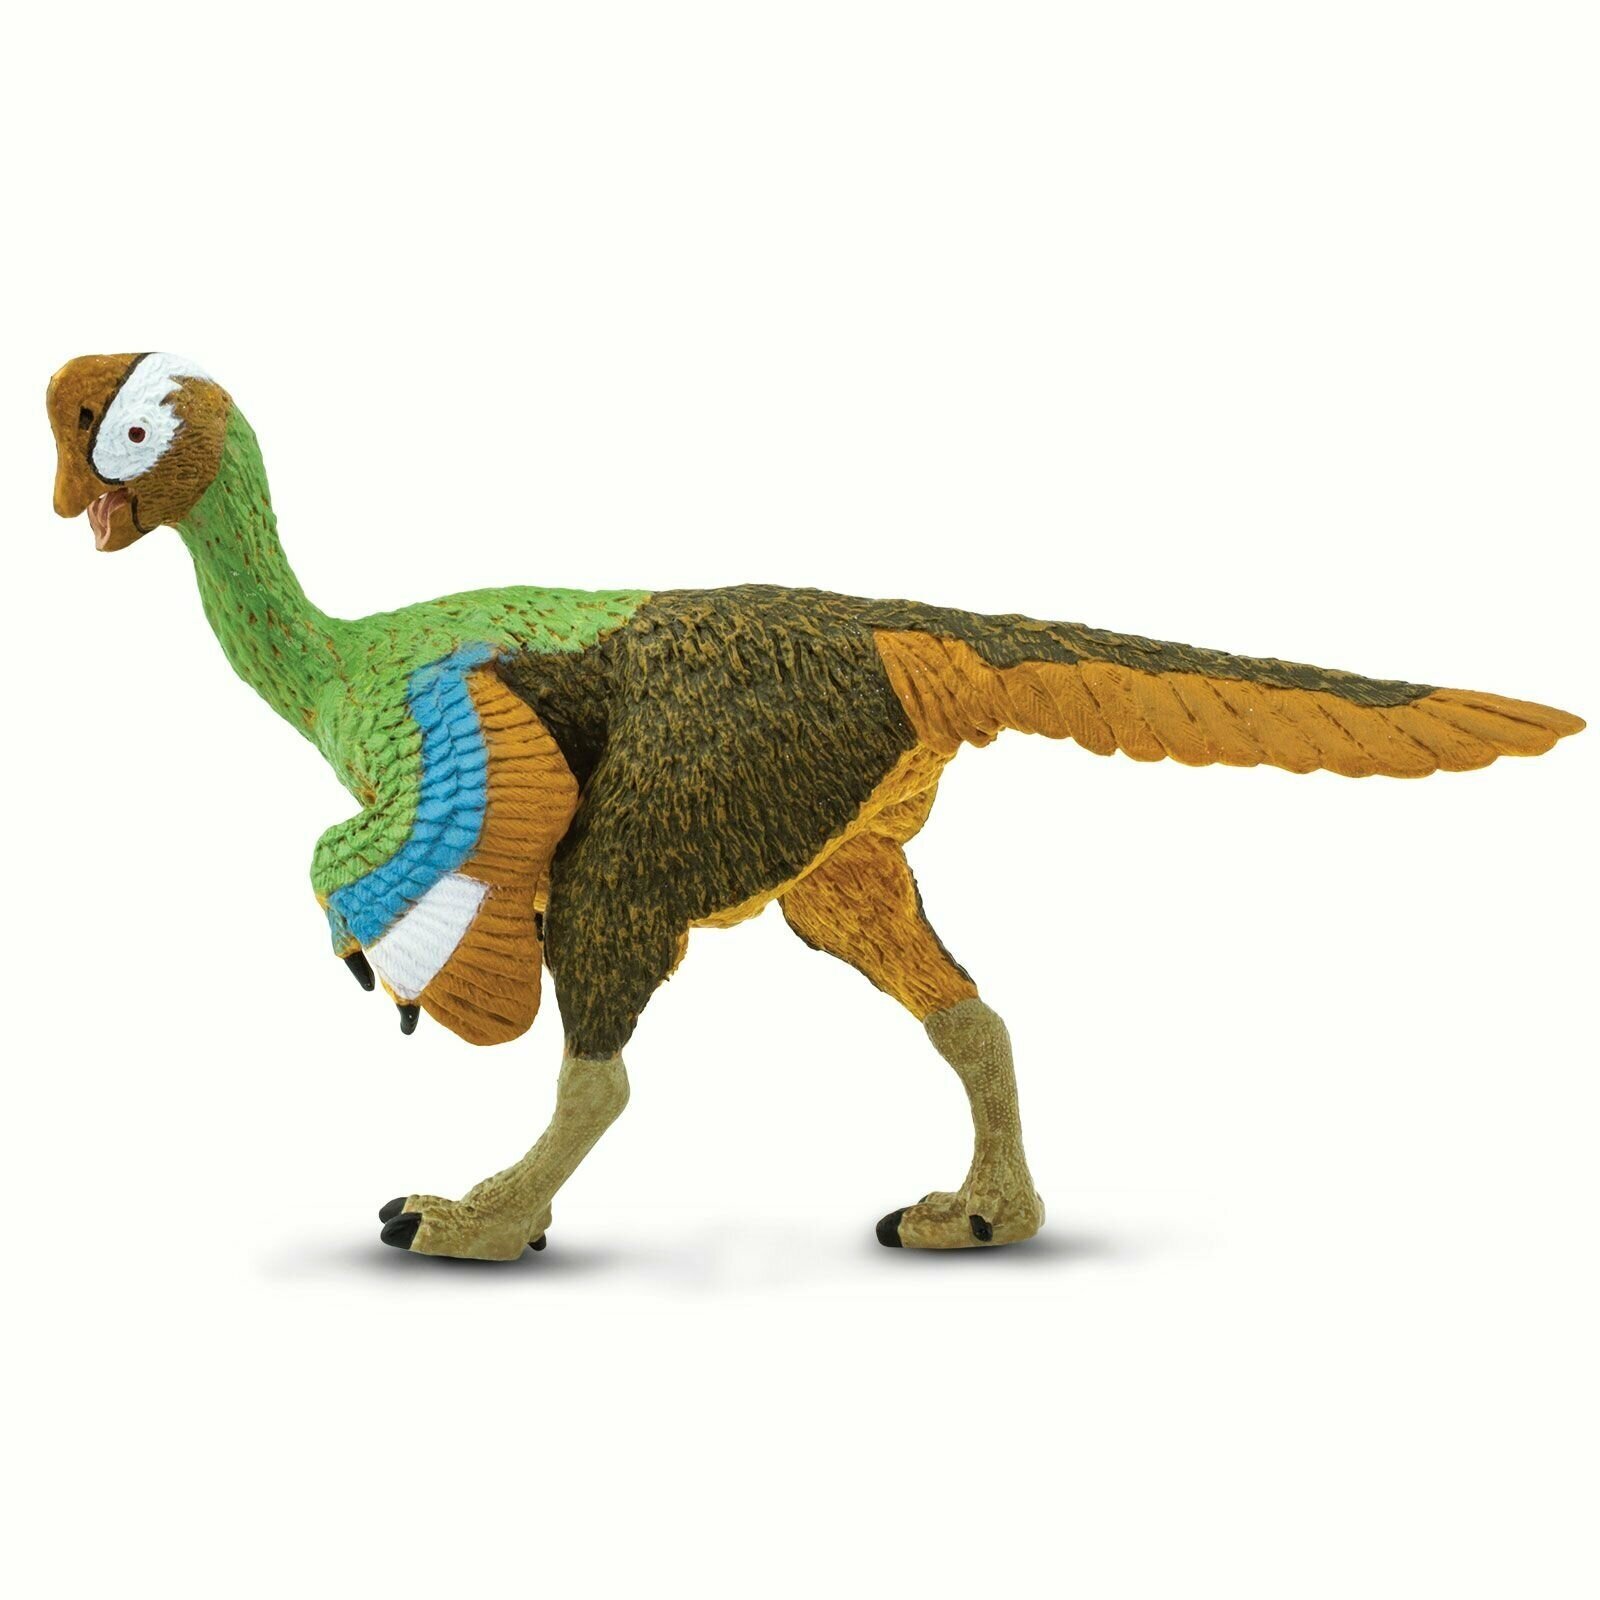 Фигурка животного динозавра Safari Ltd Читипати, для детей, игрушка коллекционная, 305929